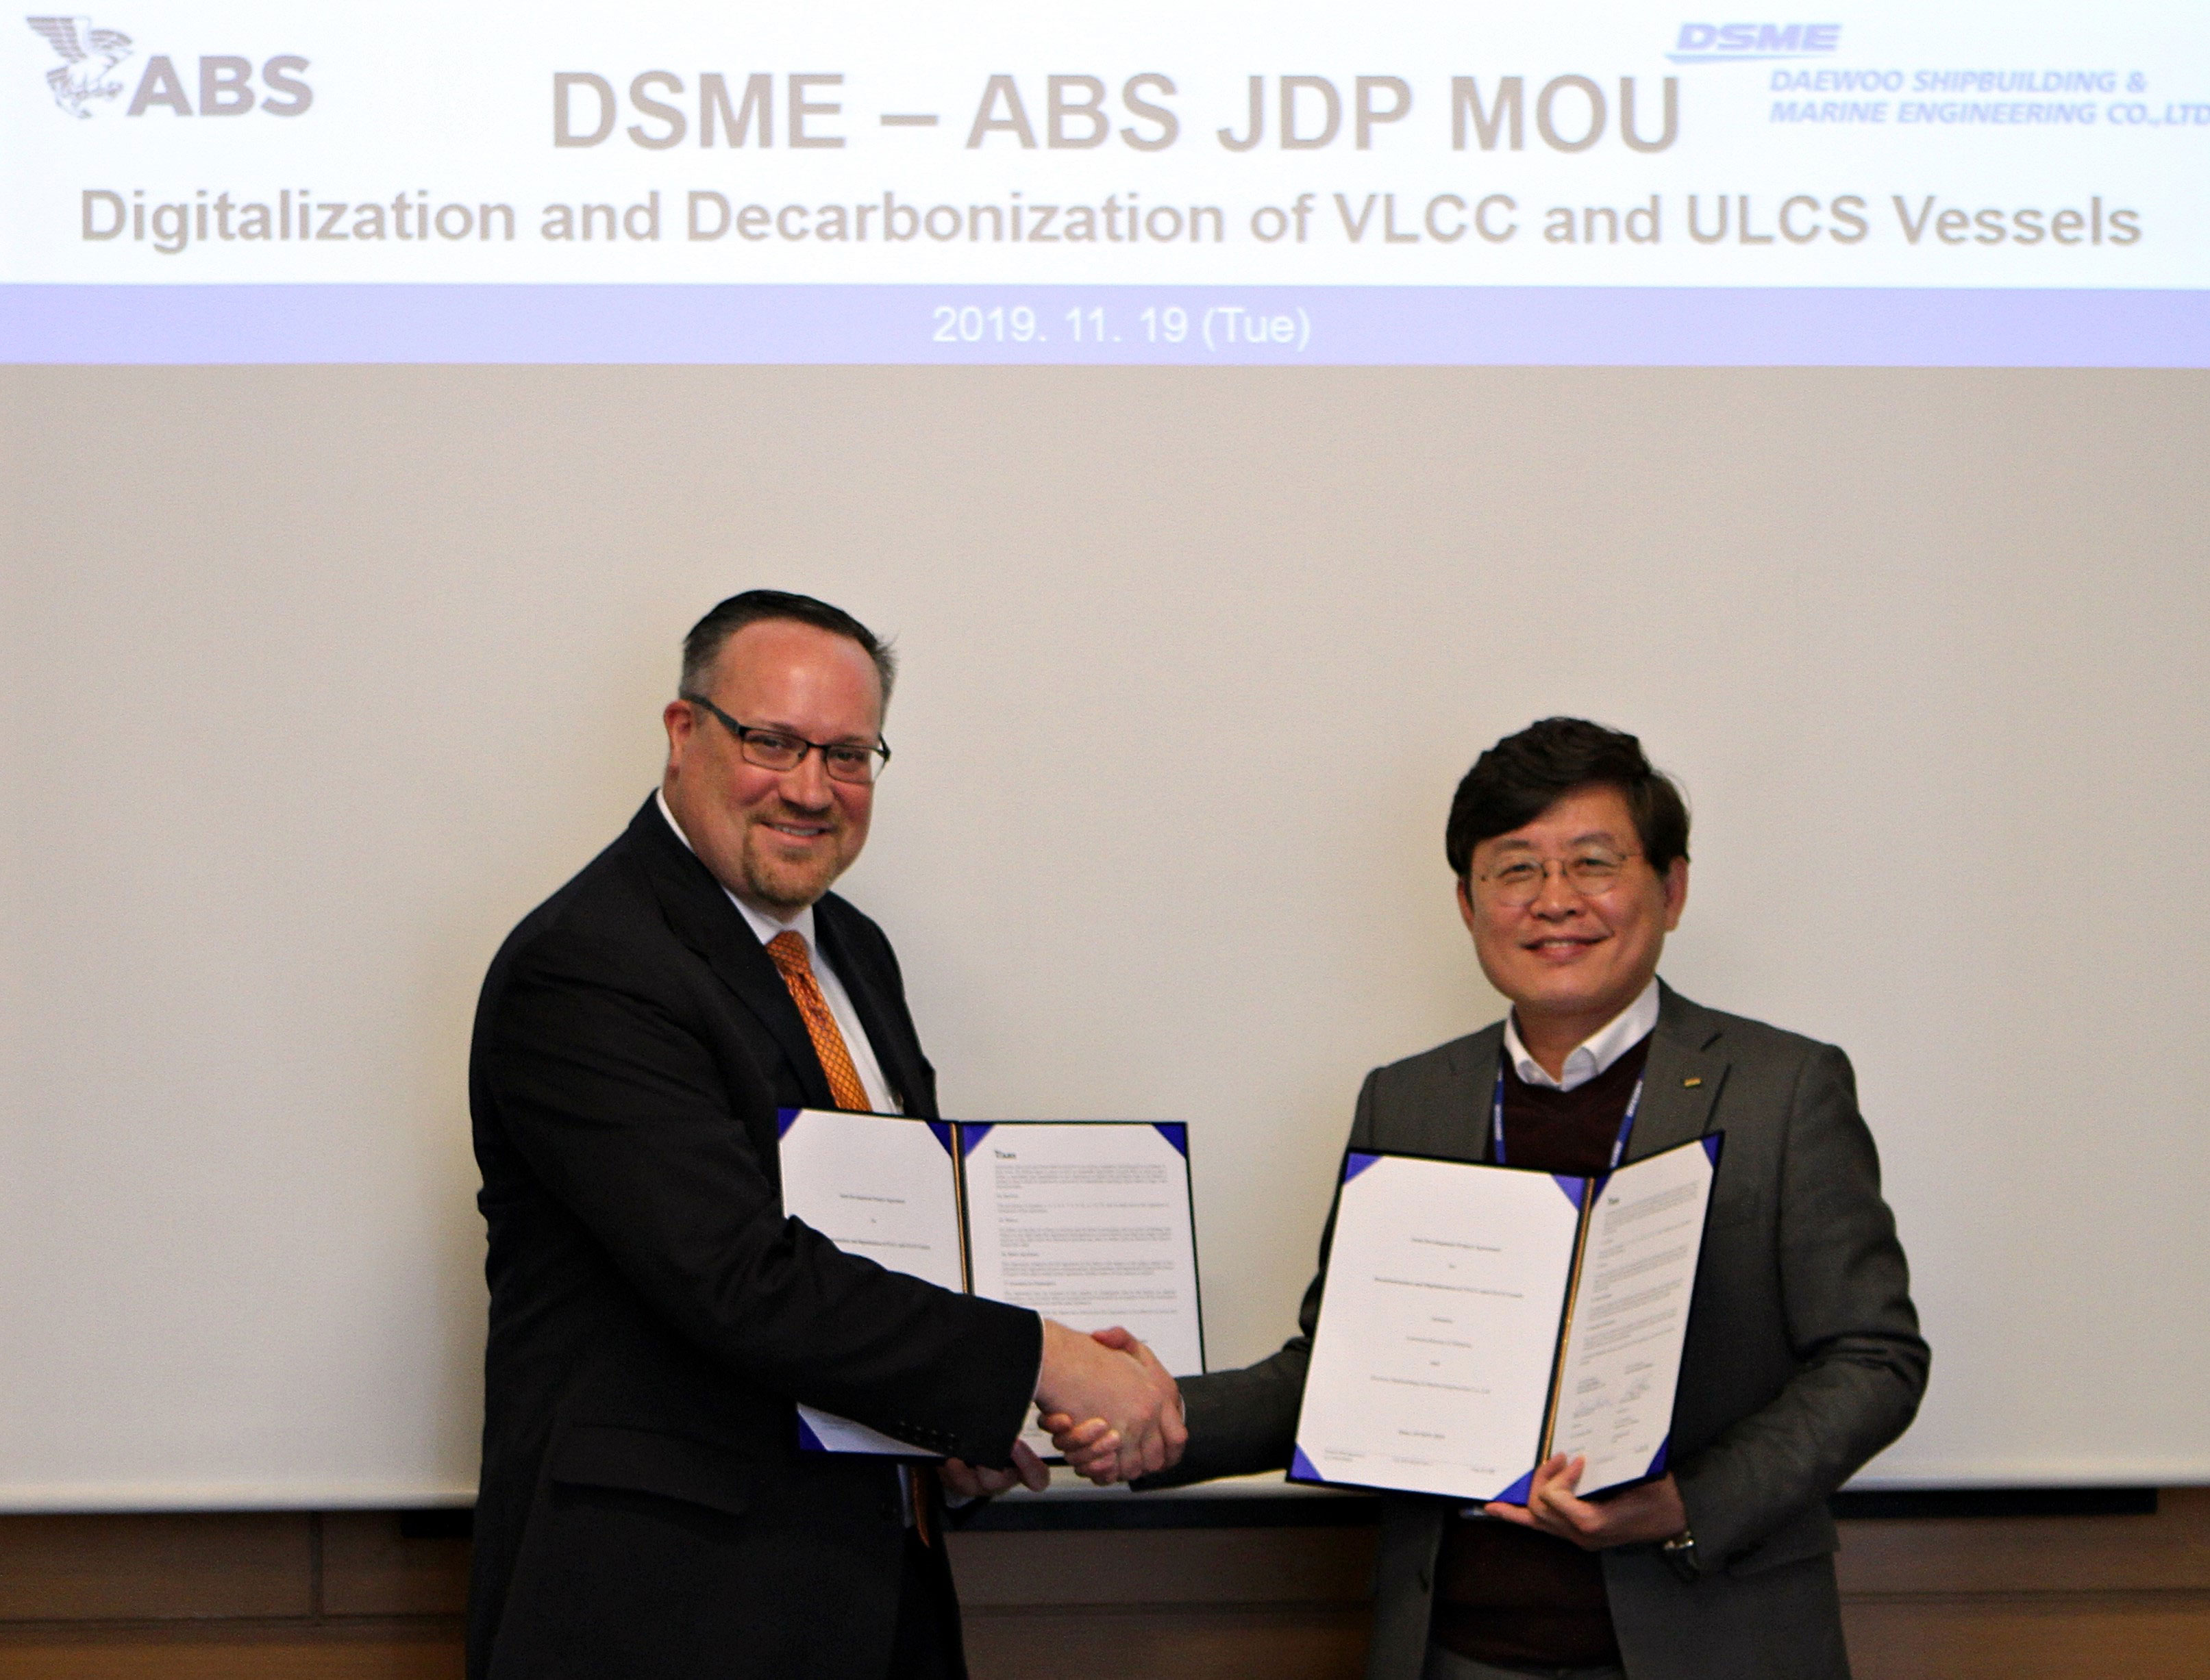 ABS and DSME Sign Digitalization and Decarbonization JDP Agreement